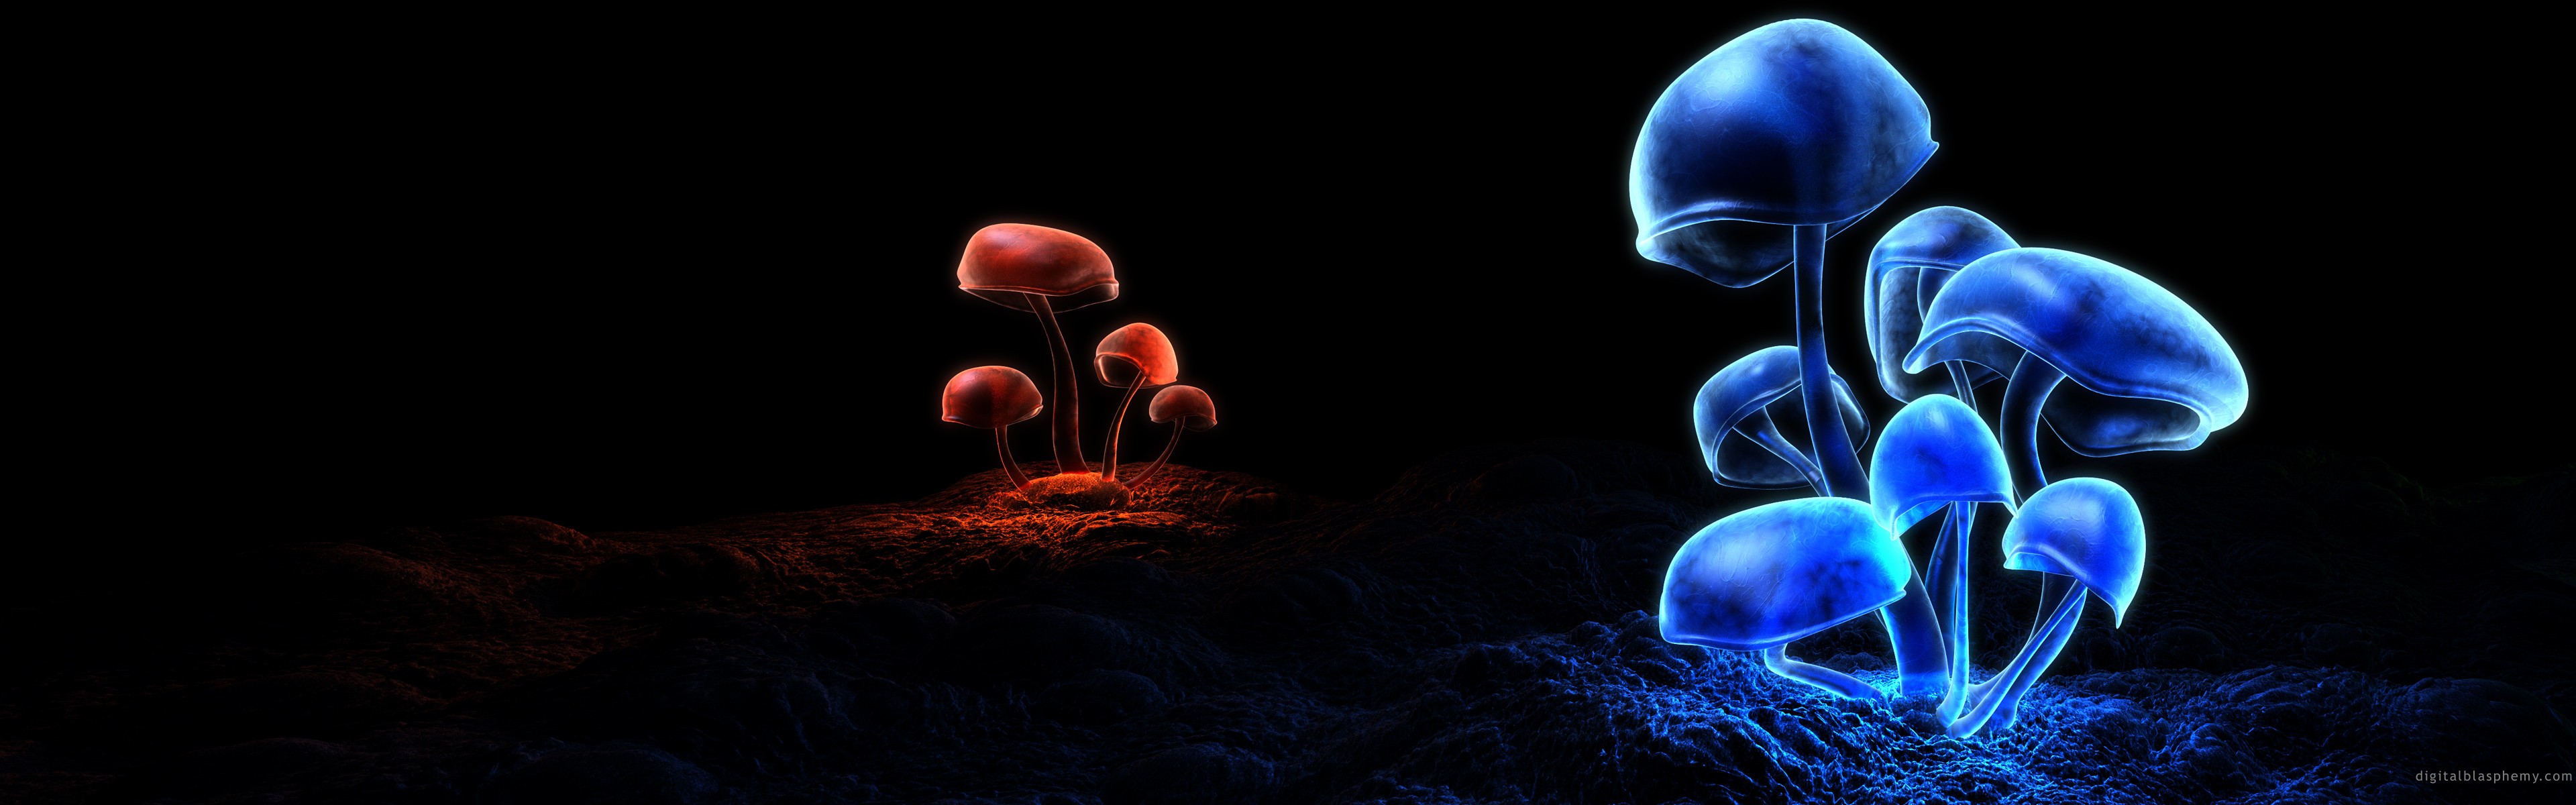 General 3840x1200 mushroom nature digital art simple background red blue